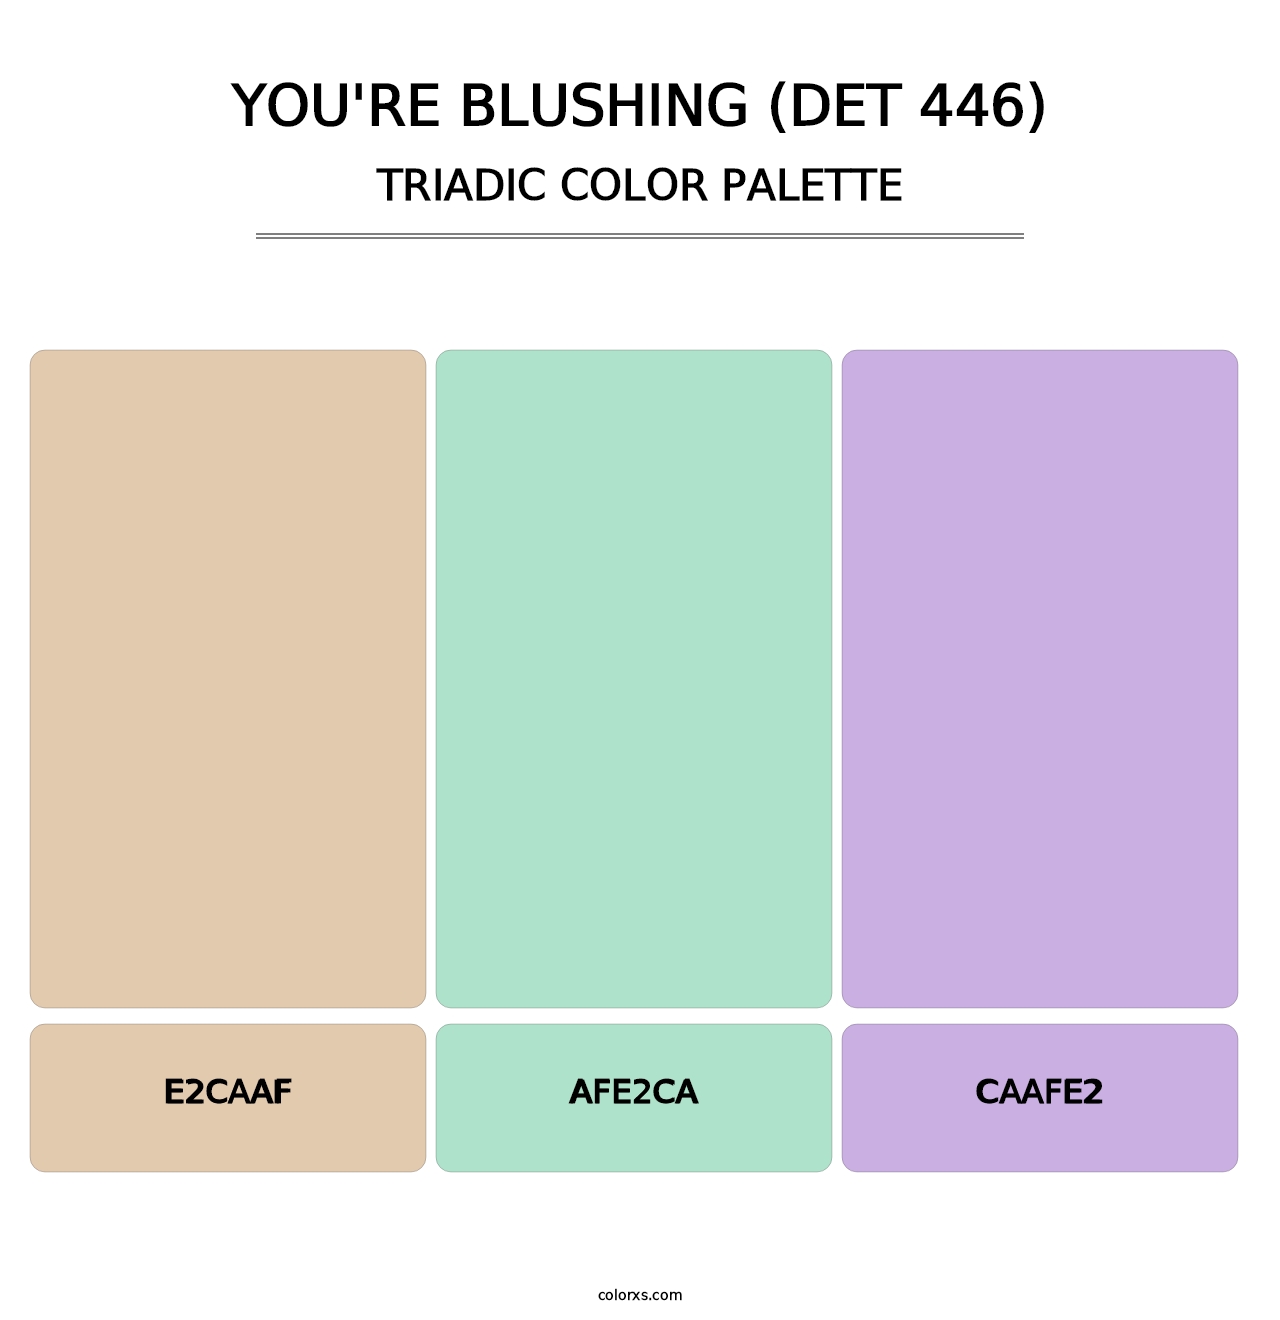 You're Blushing (DET 446) - Triadic Color Palette